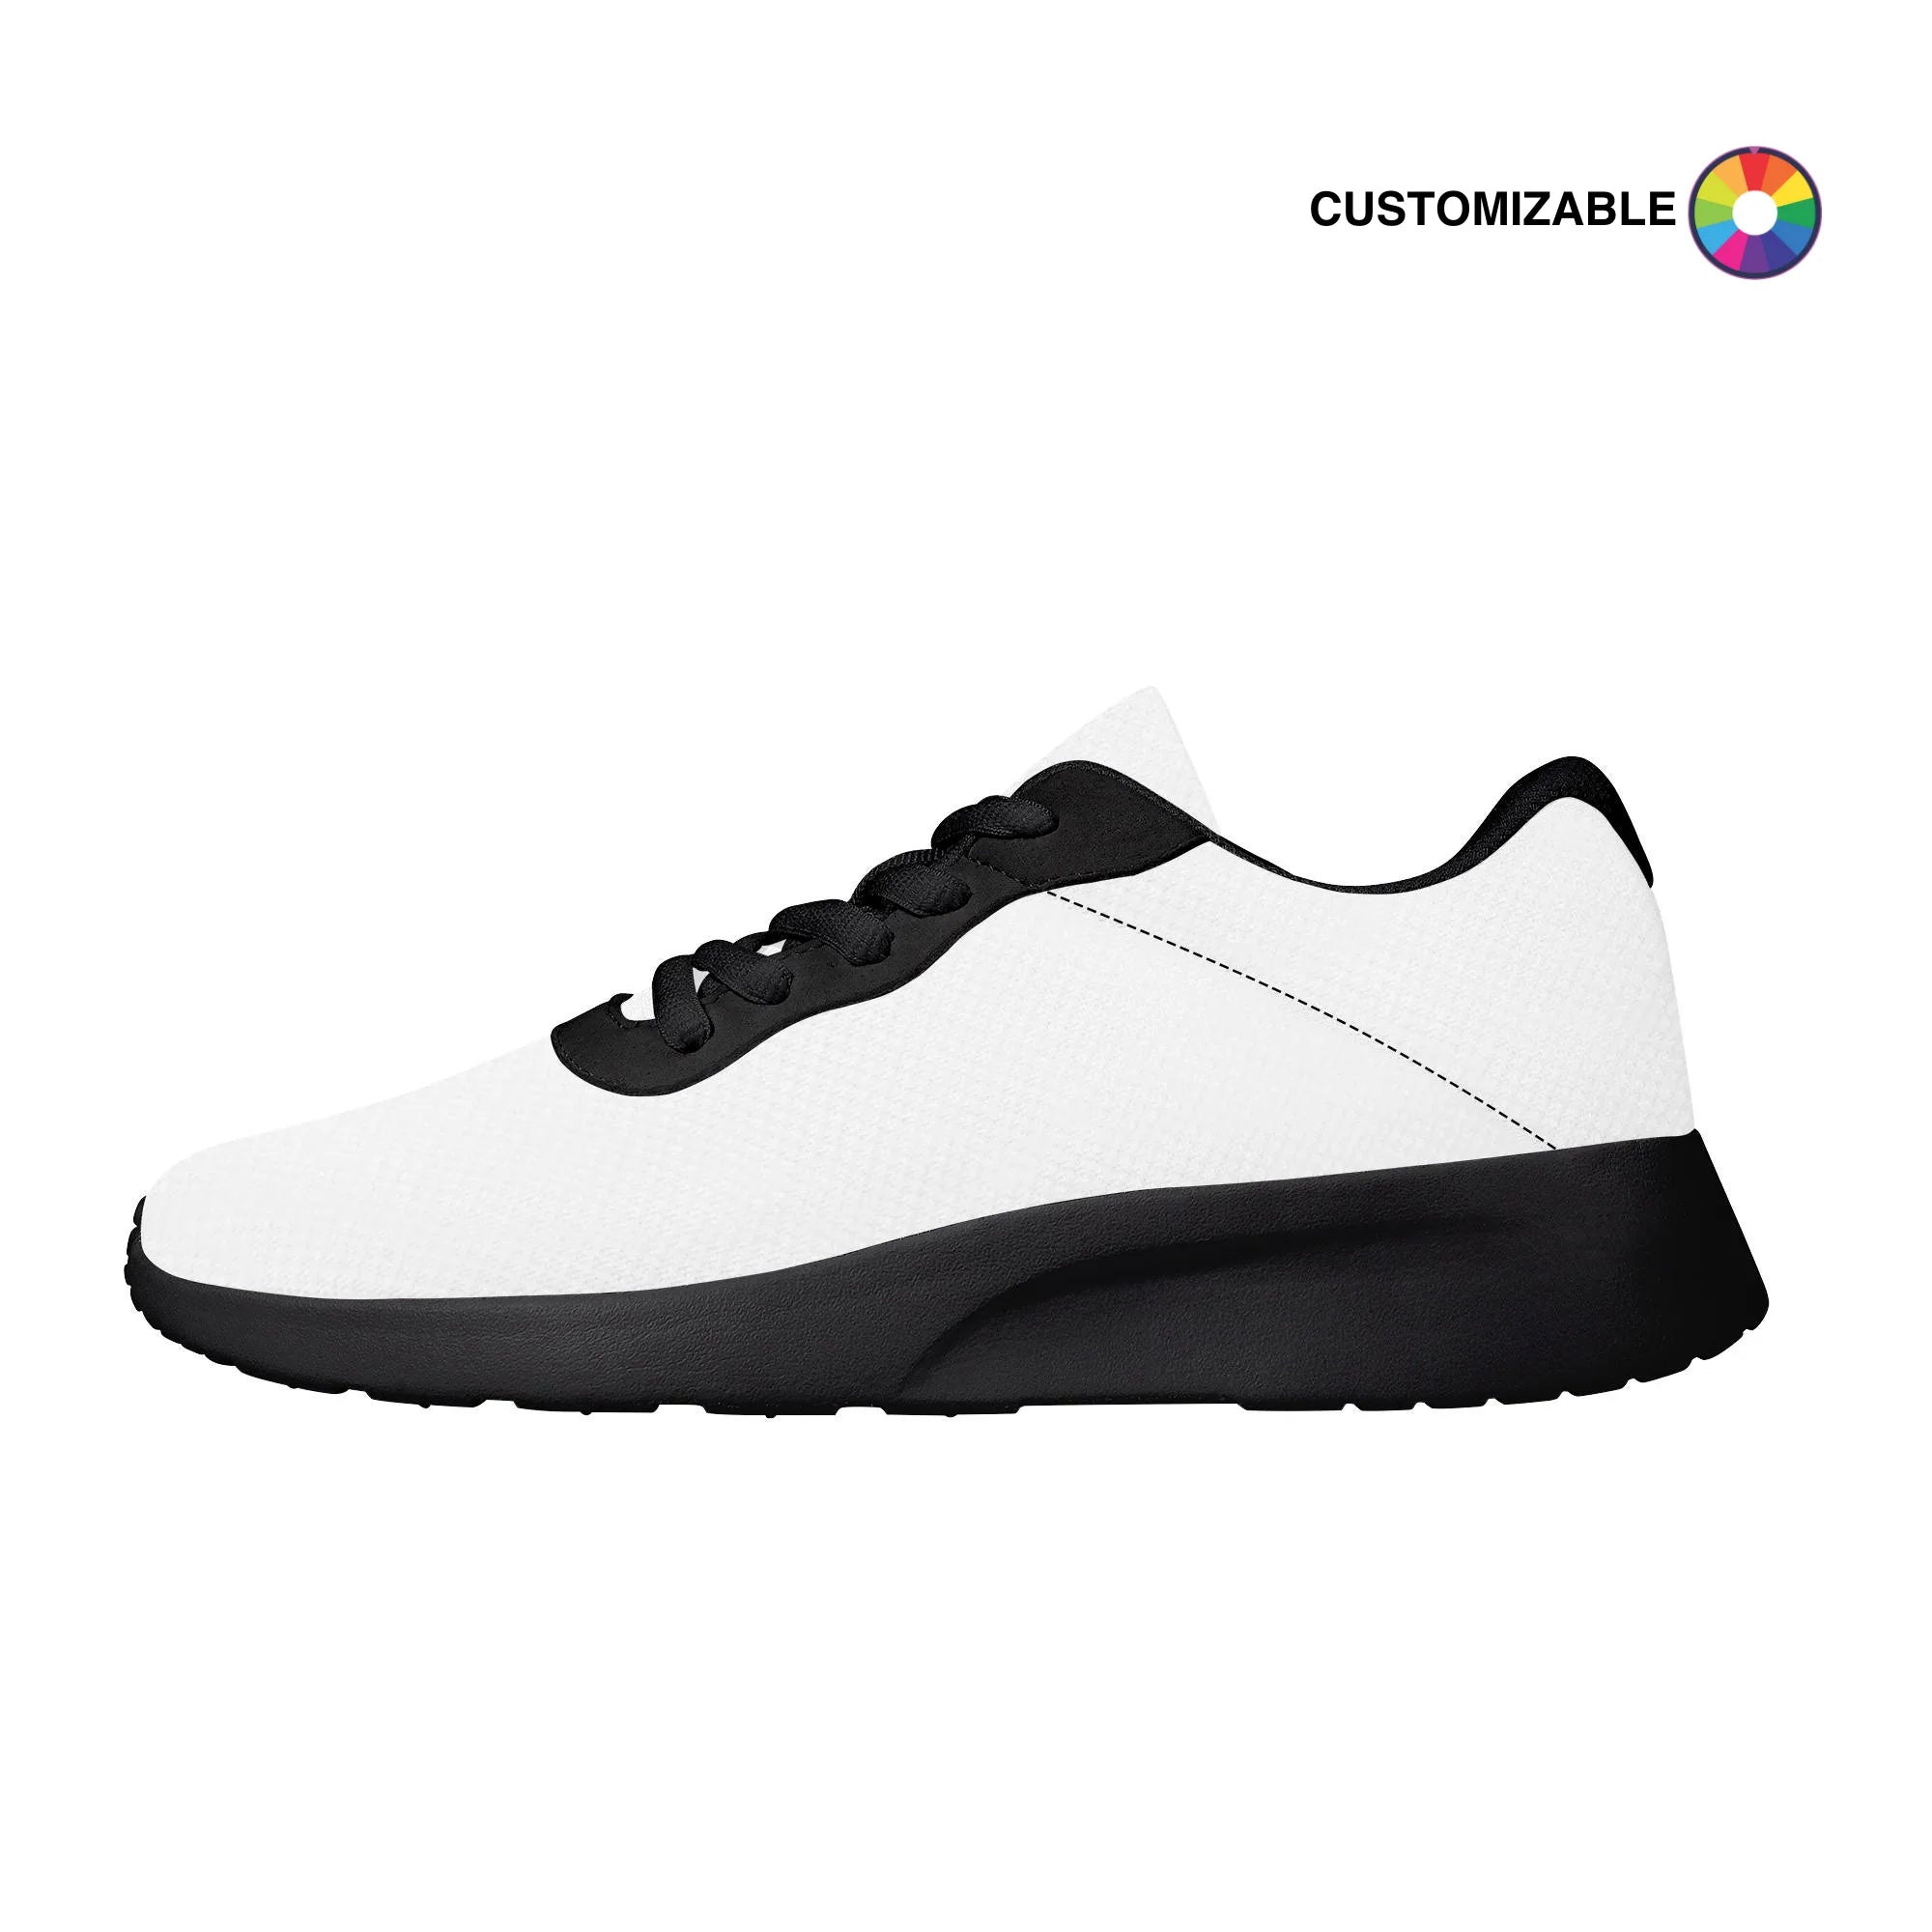 Customizable Air Mesh Zero - Black | Design your own | Shoe Zero